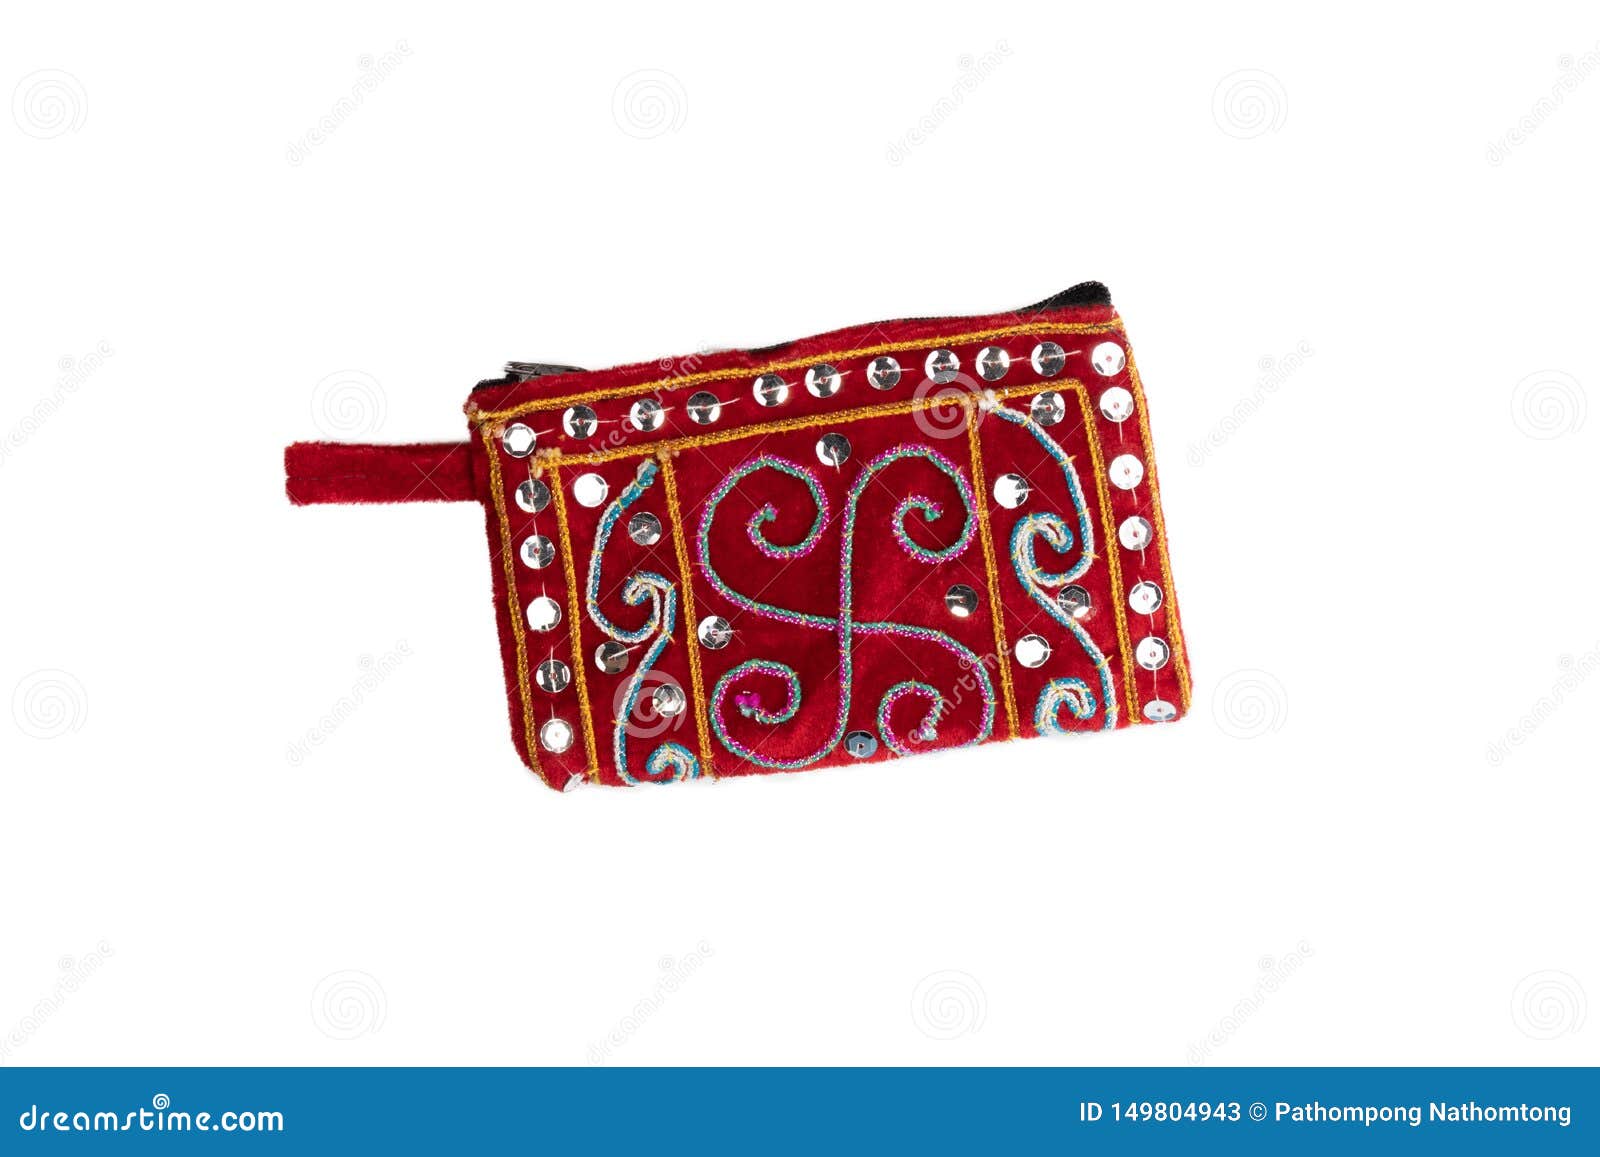 Kutchi Work Wallet at Rs 70 | Bhuj | ID: 12565792830